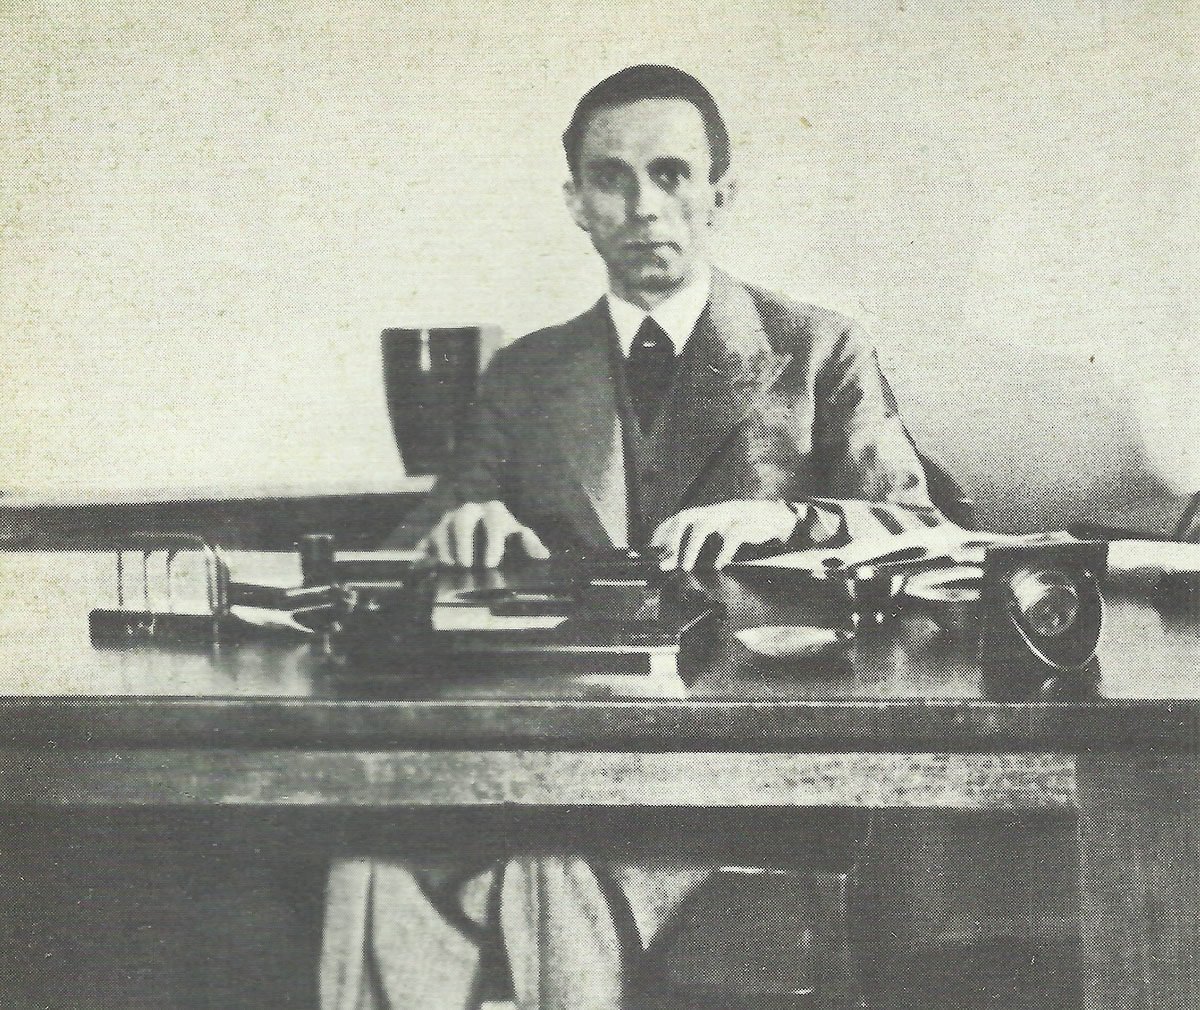 Propaganda Minister Joseph Goebbels